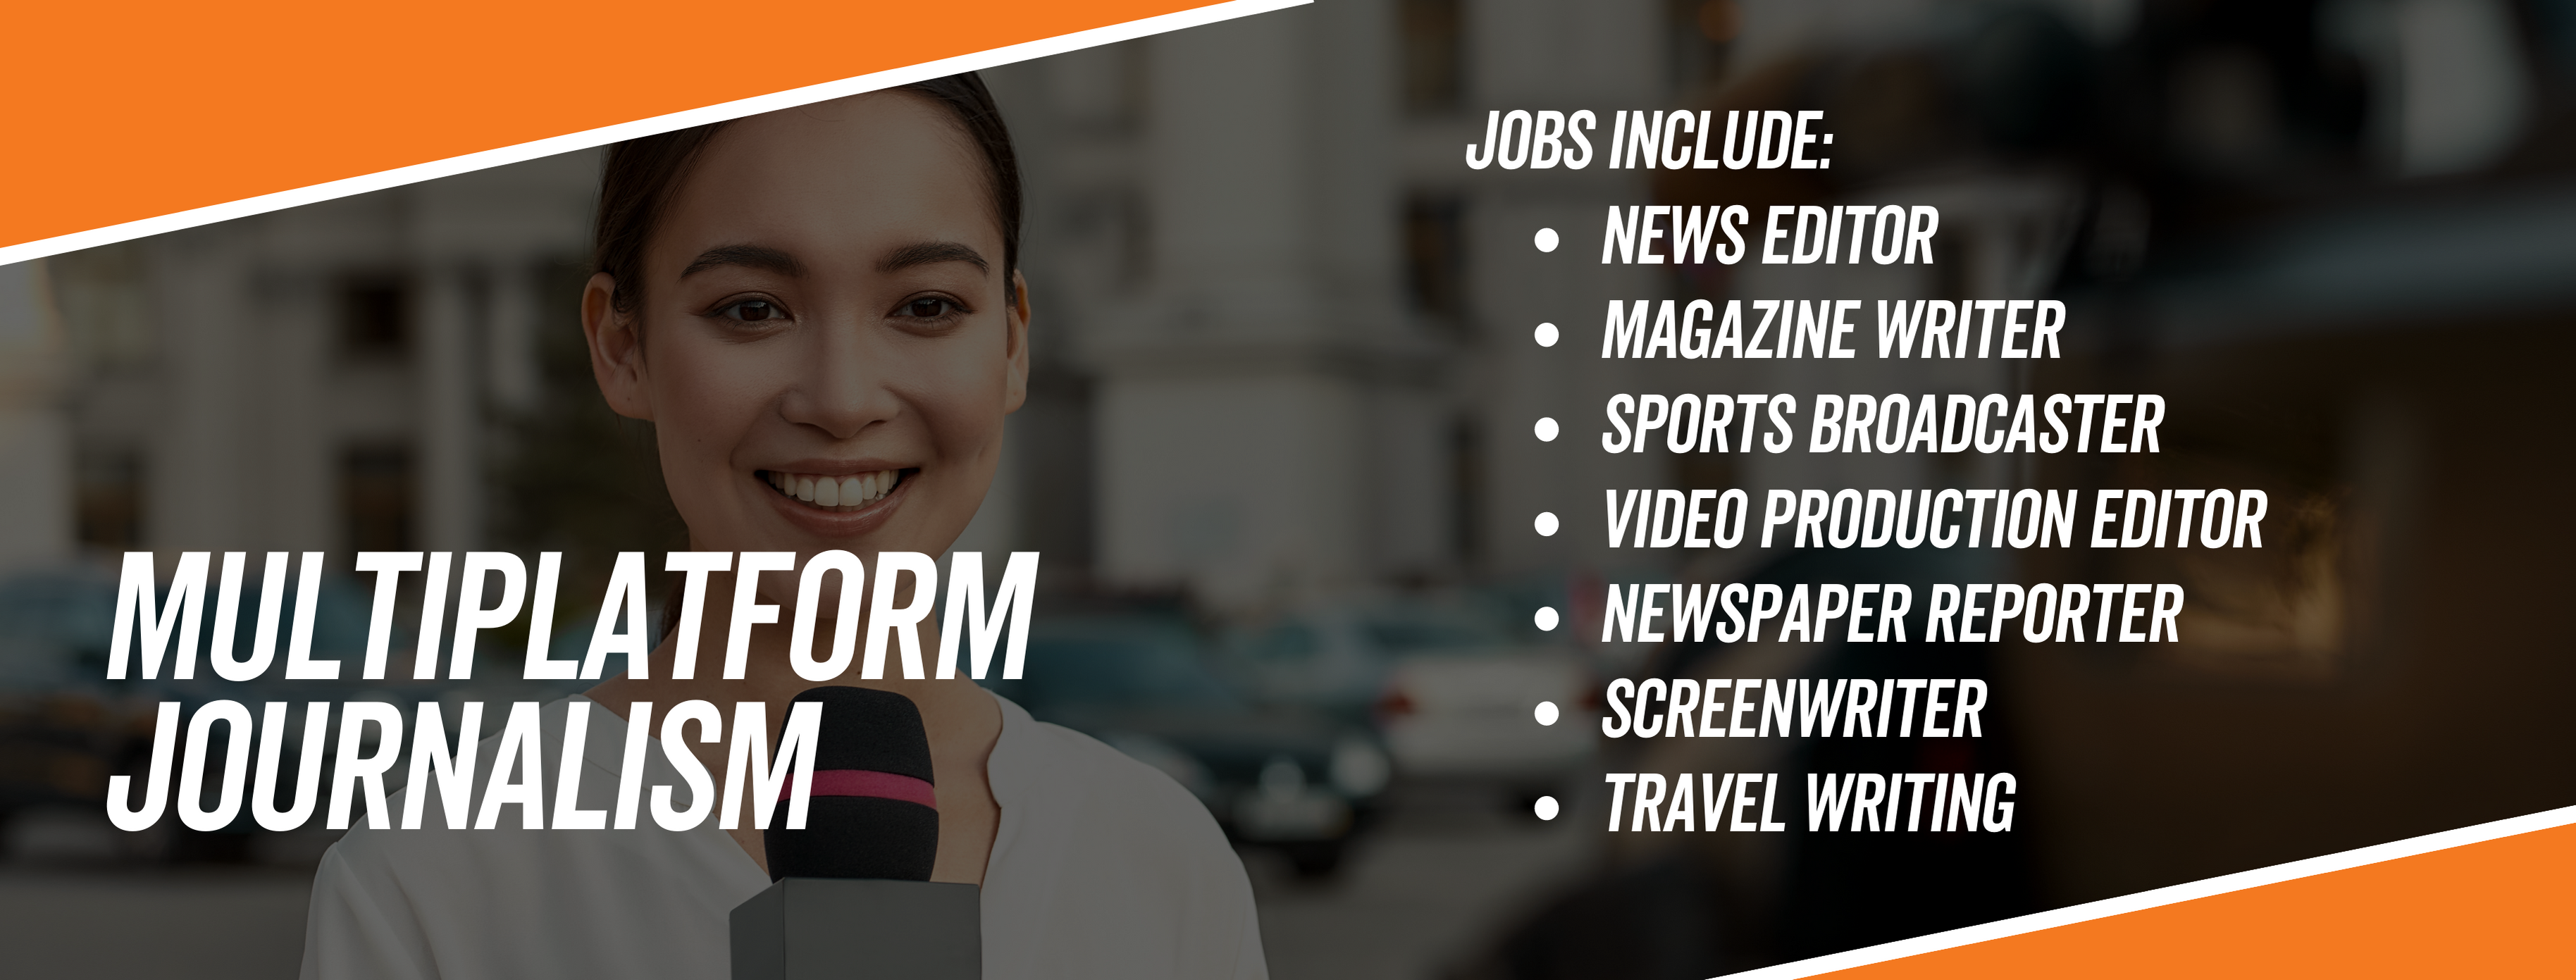 Multiplatform journalism jobs include: news editor, magazine writer, sports broadcaster, video production editor, newspaper reporter, screenwriter, travel writing